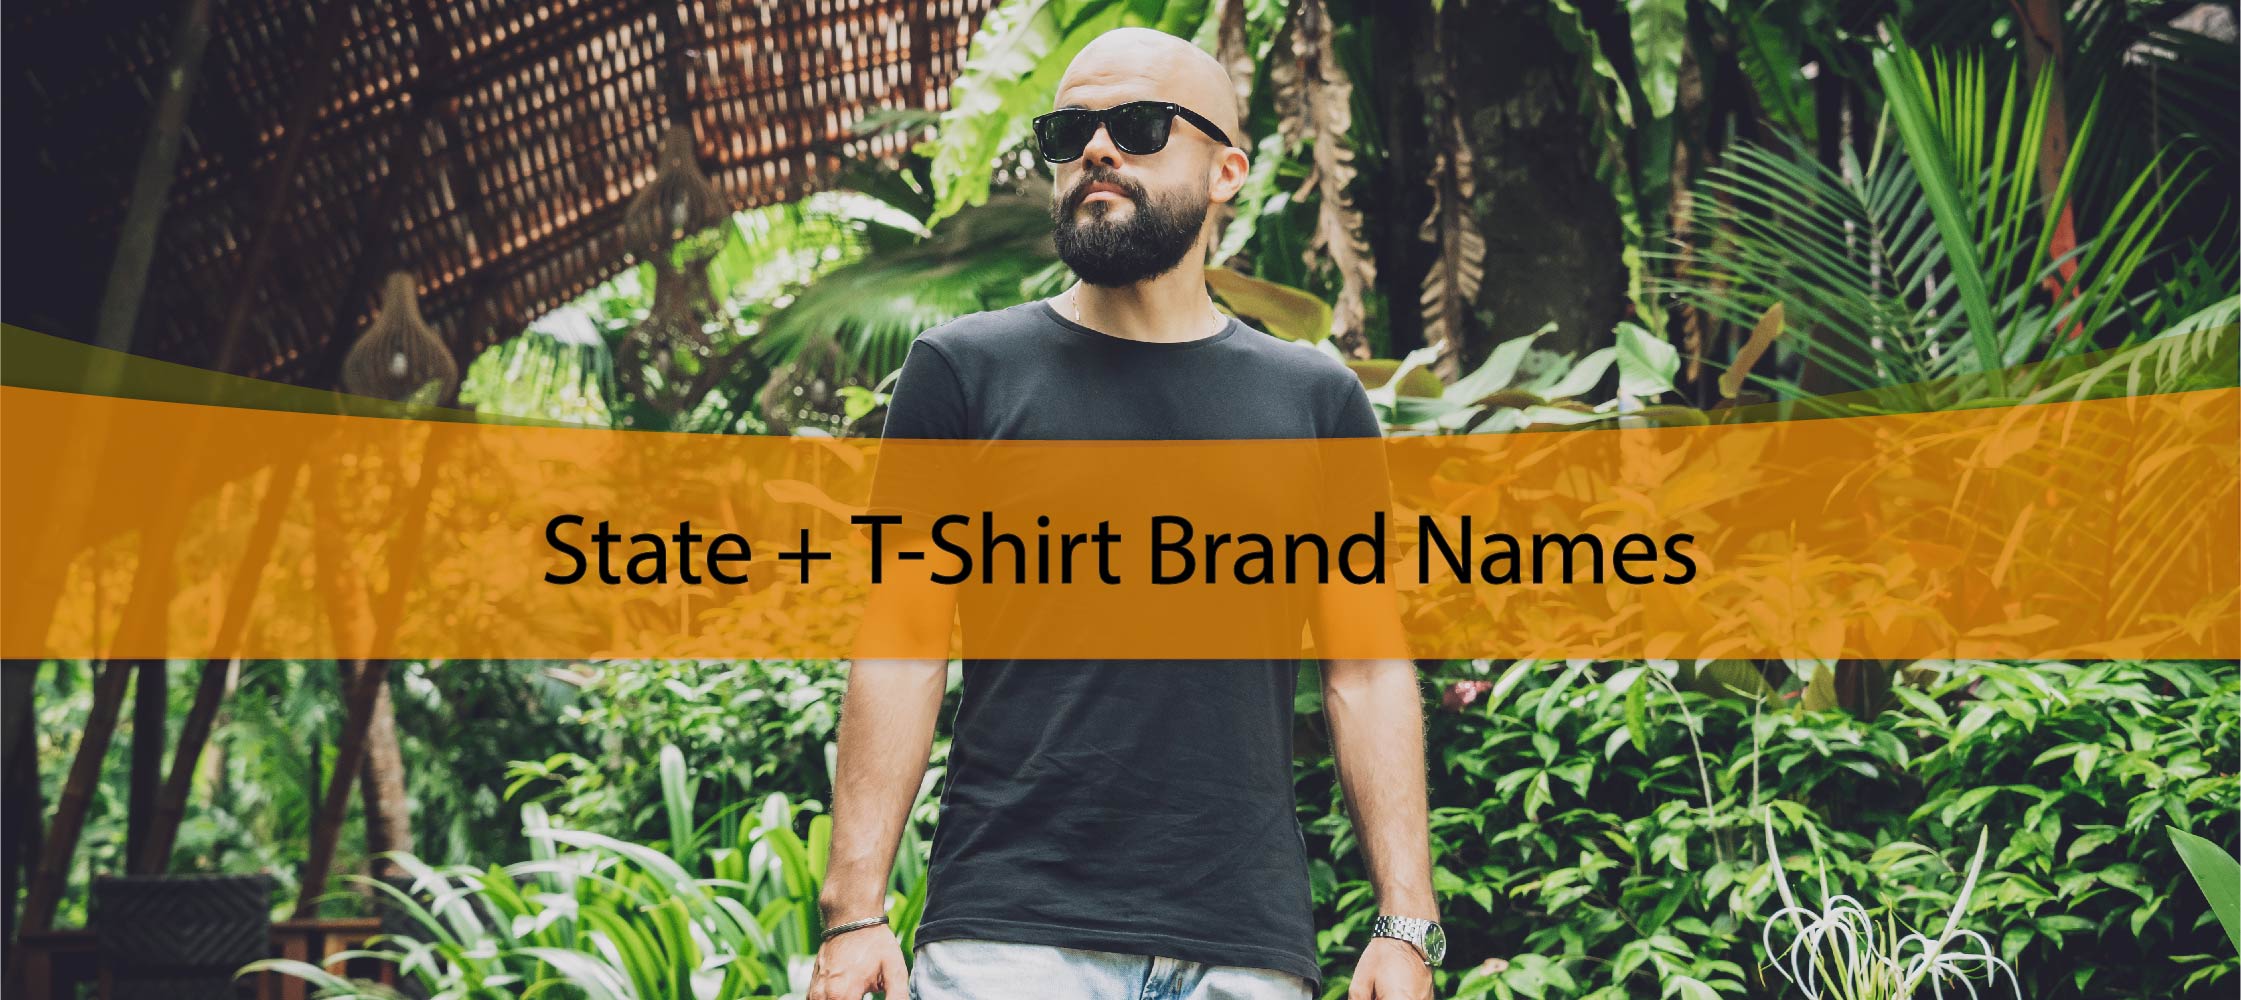 State + T-Shirt Brand Names